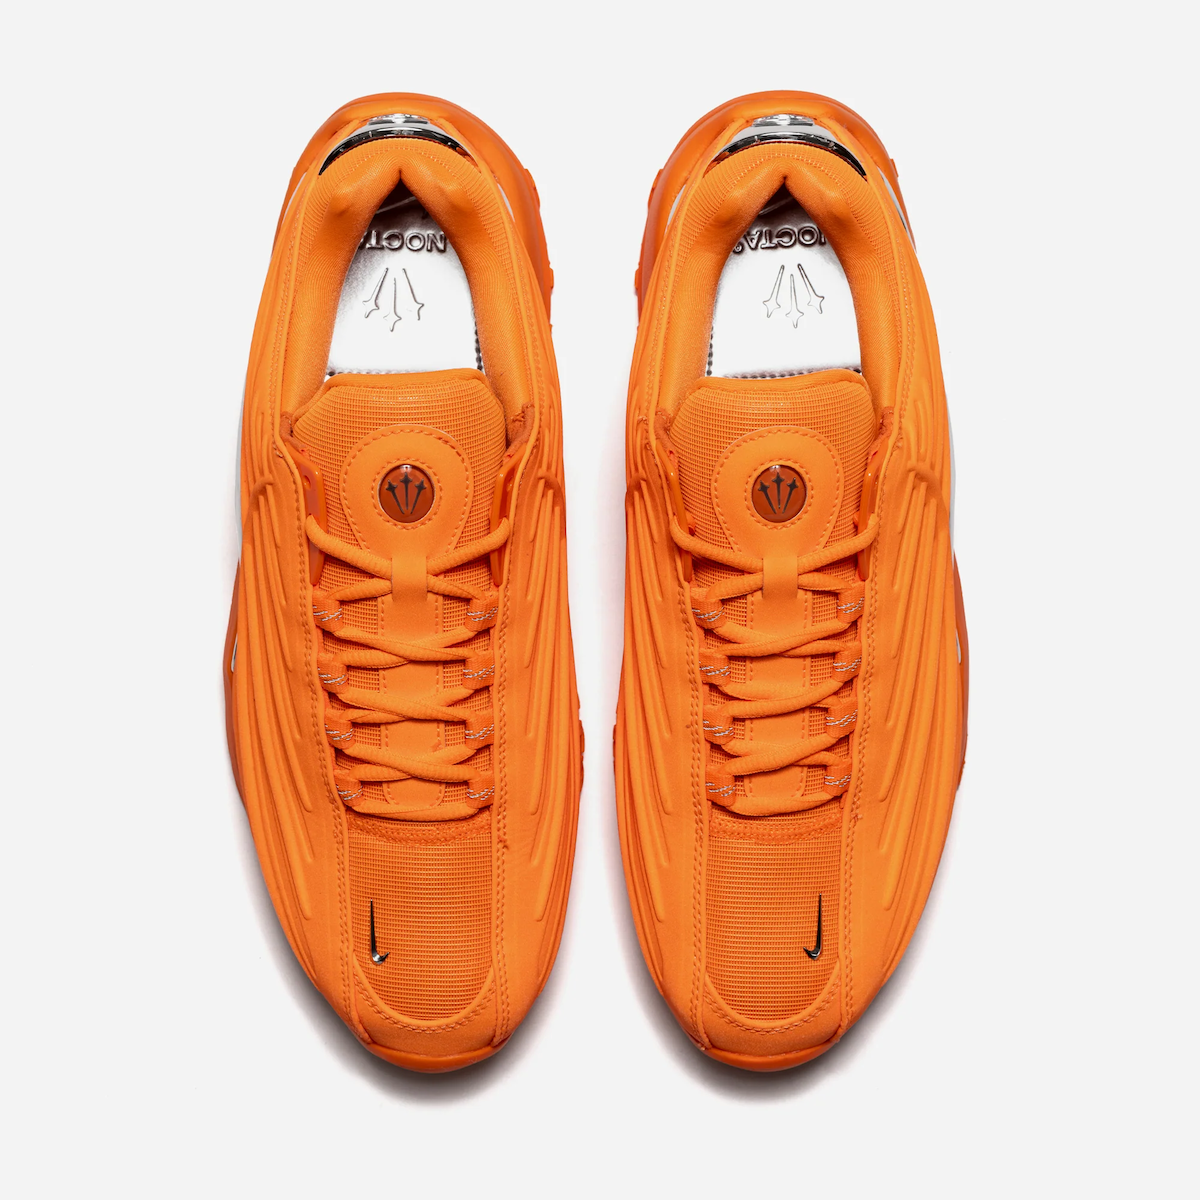 NOCTA x Nike Hot Step Air Terra 2 “Total Orange”